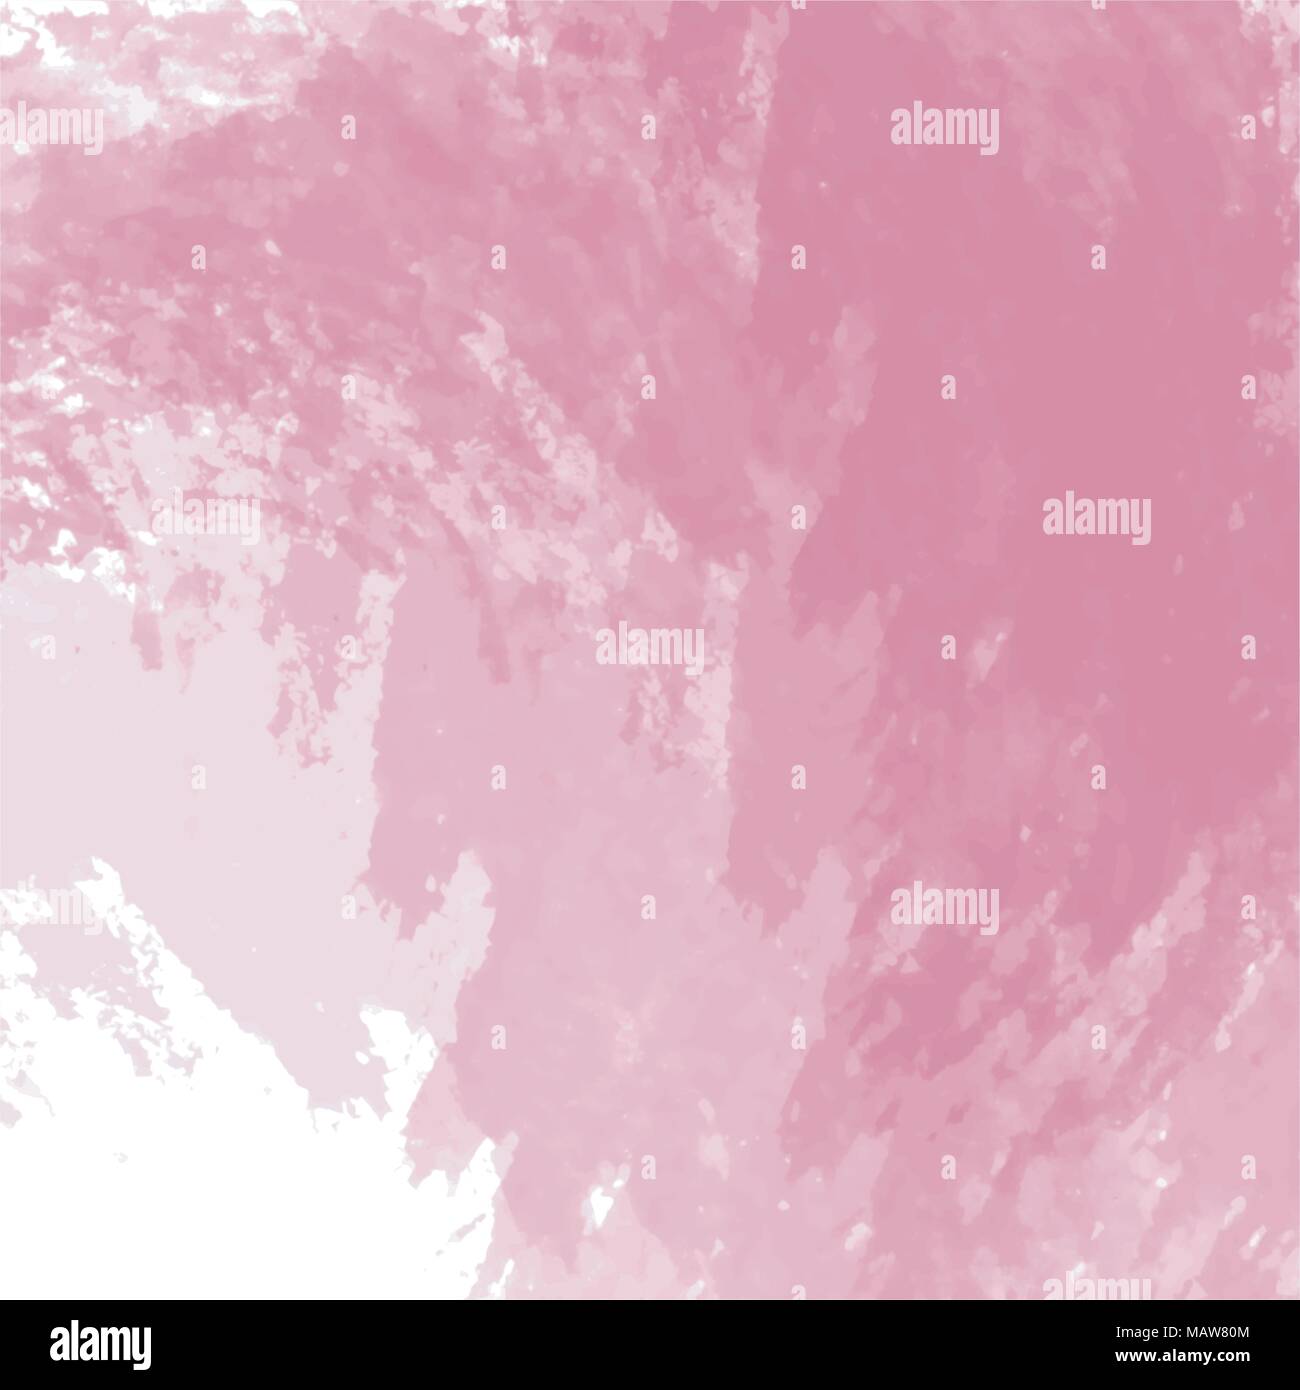 pink watercolor brush stroke background pattern, vector illustration Stock Vector